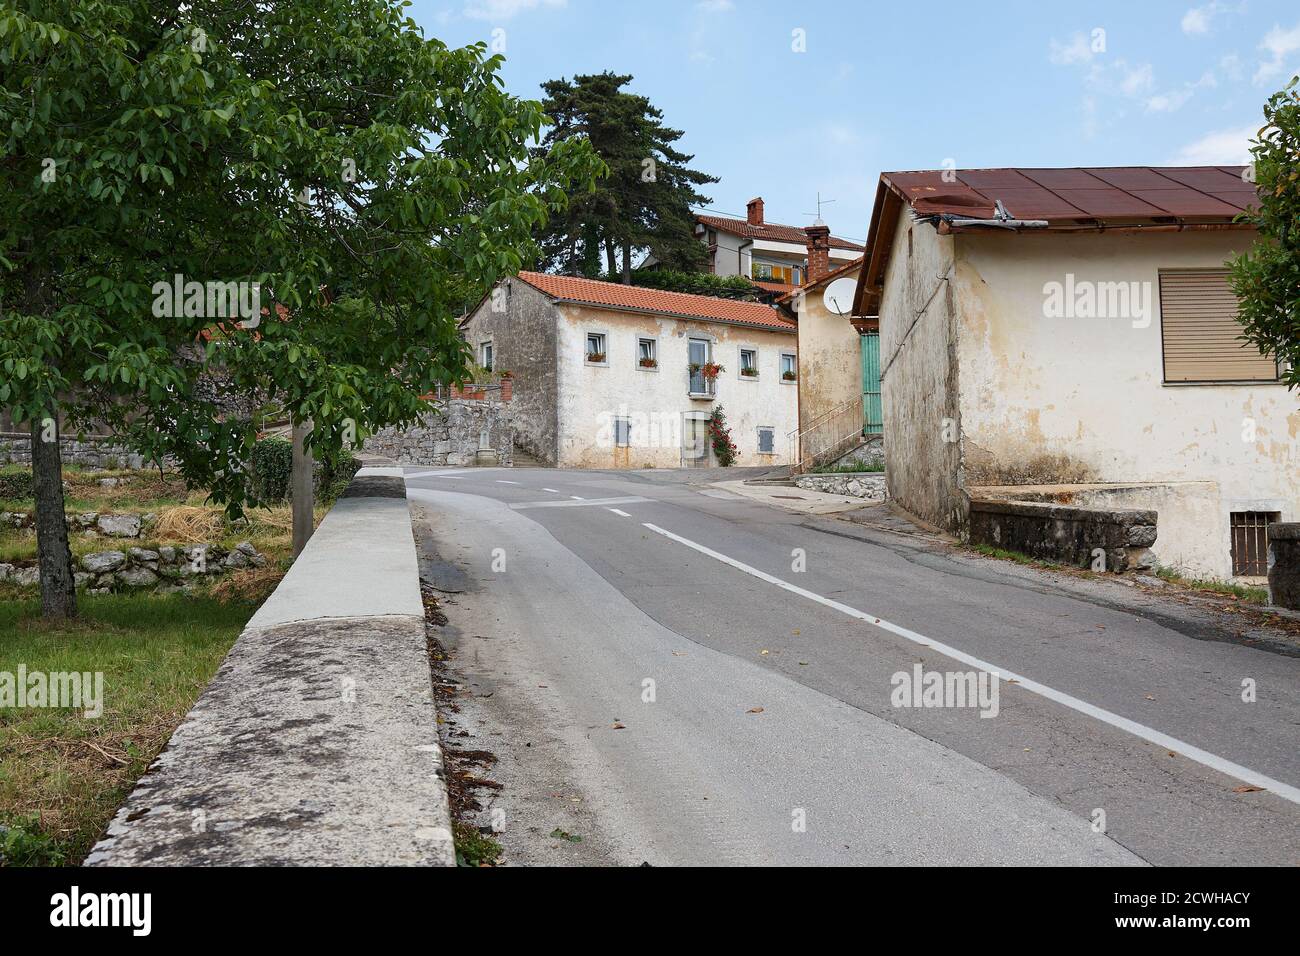 Road in Croatia through a village Stock Photo